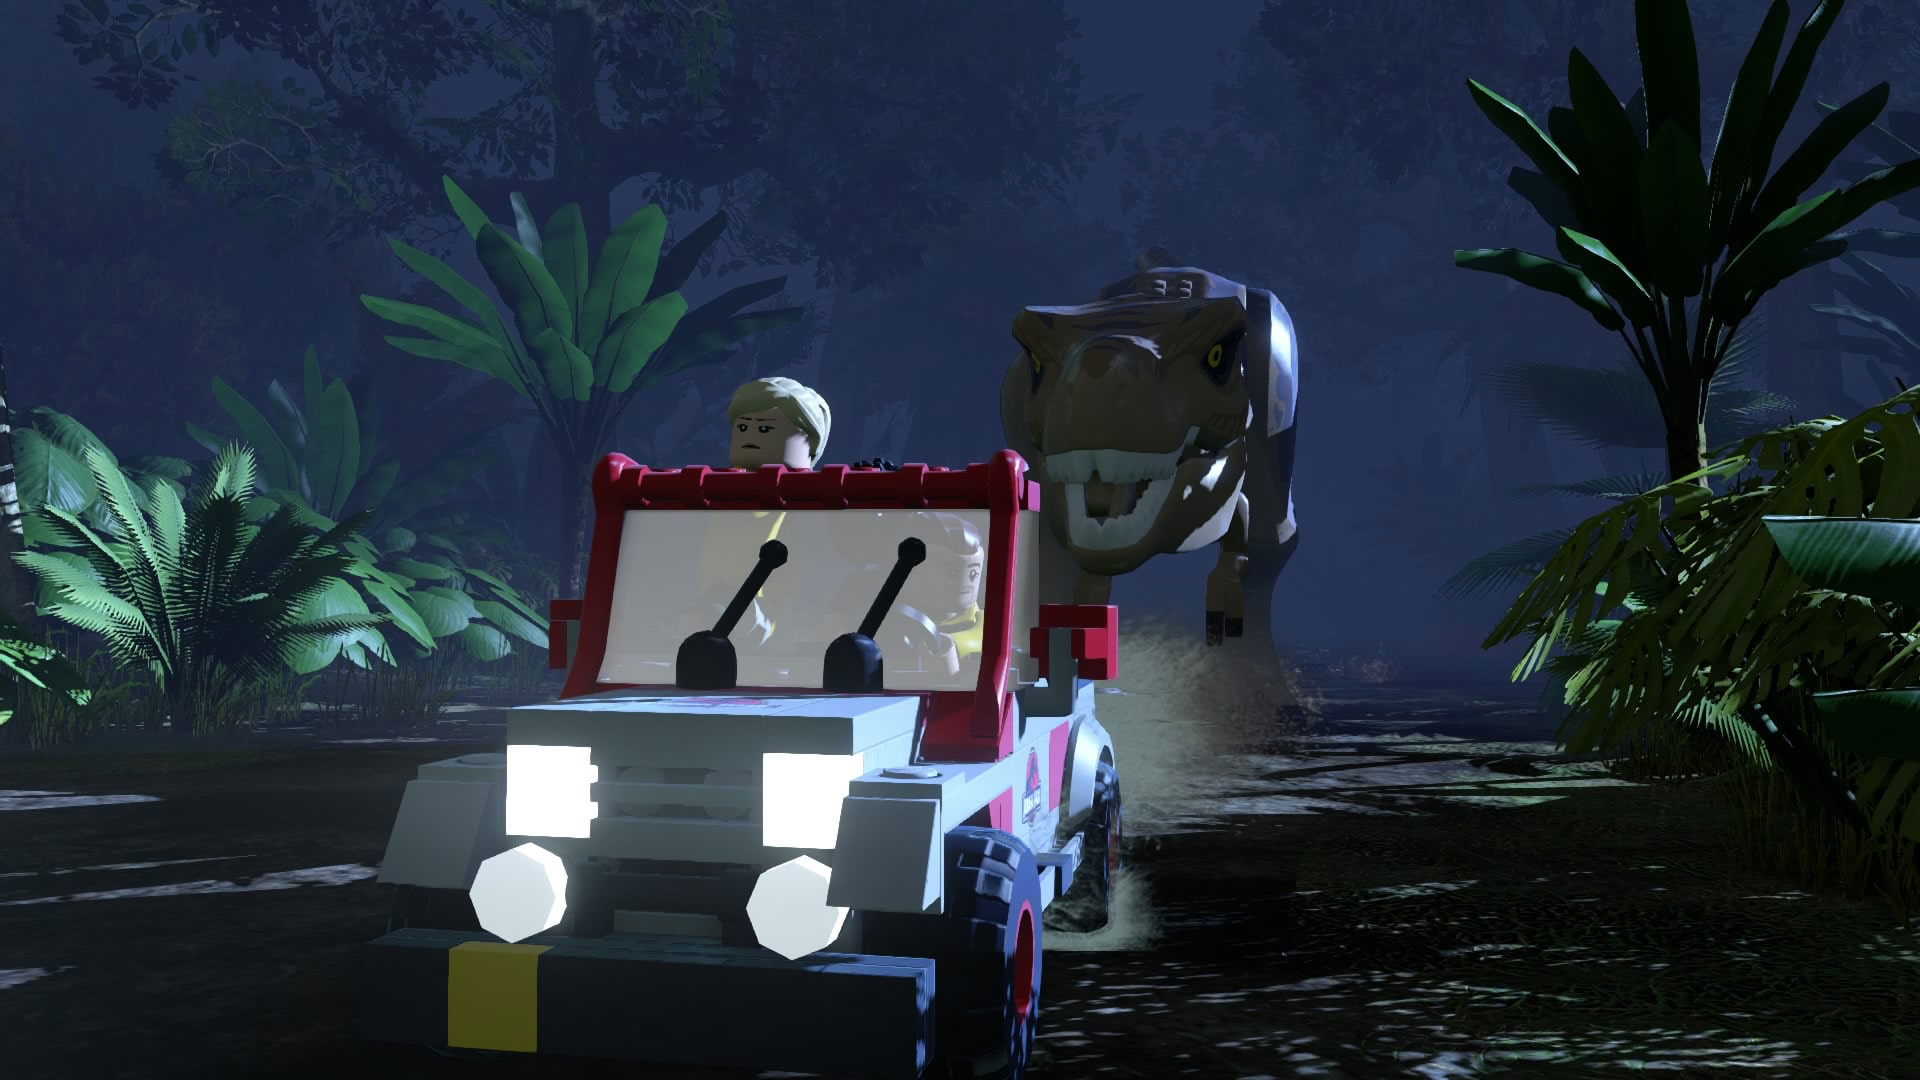 Jogo LEGO Jurassic World Playstation Hits - PS4 - Telltale Games